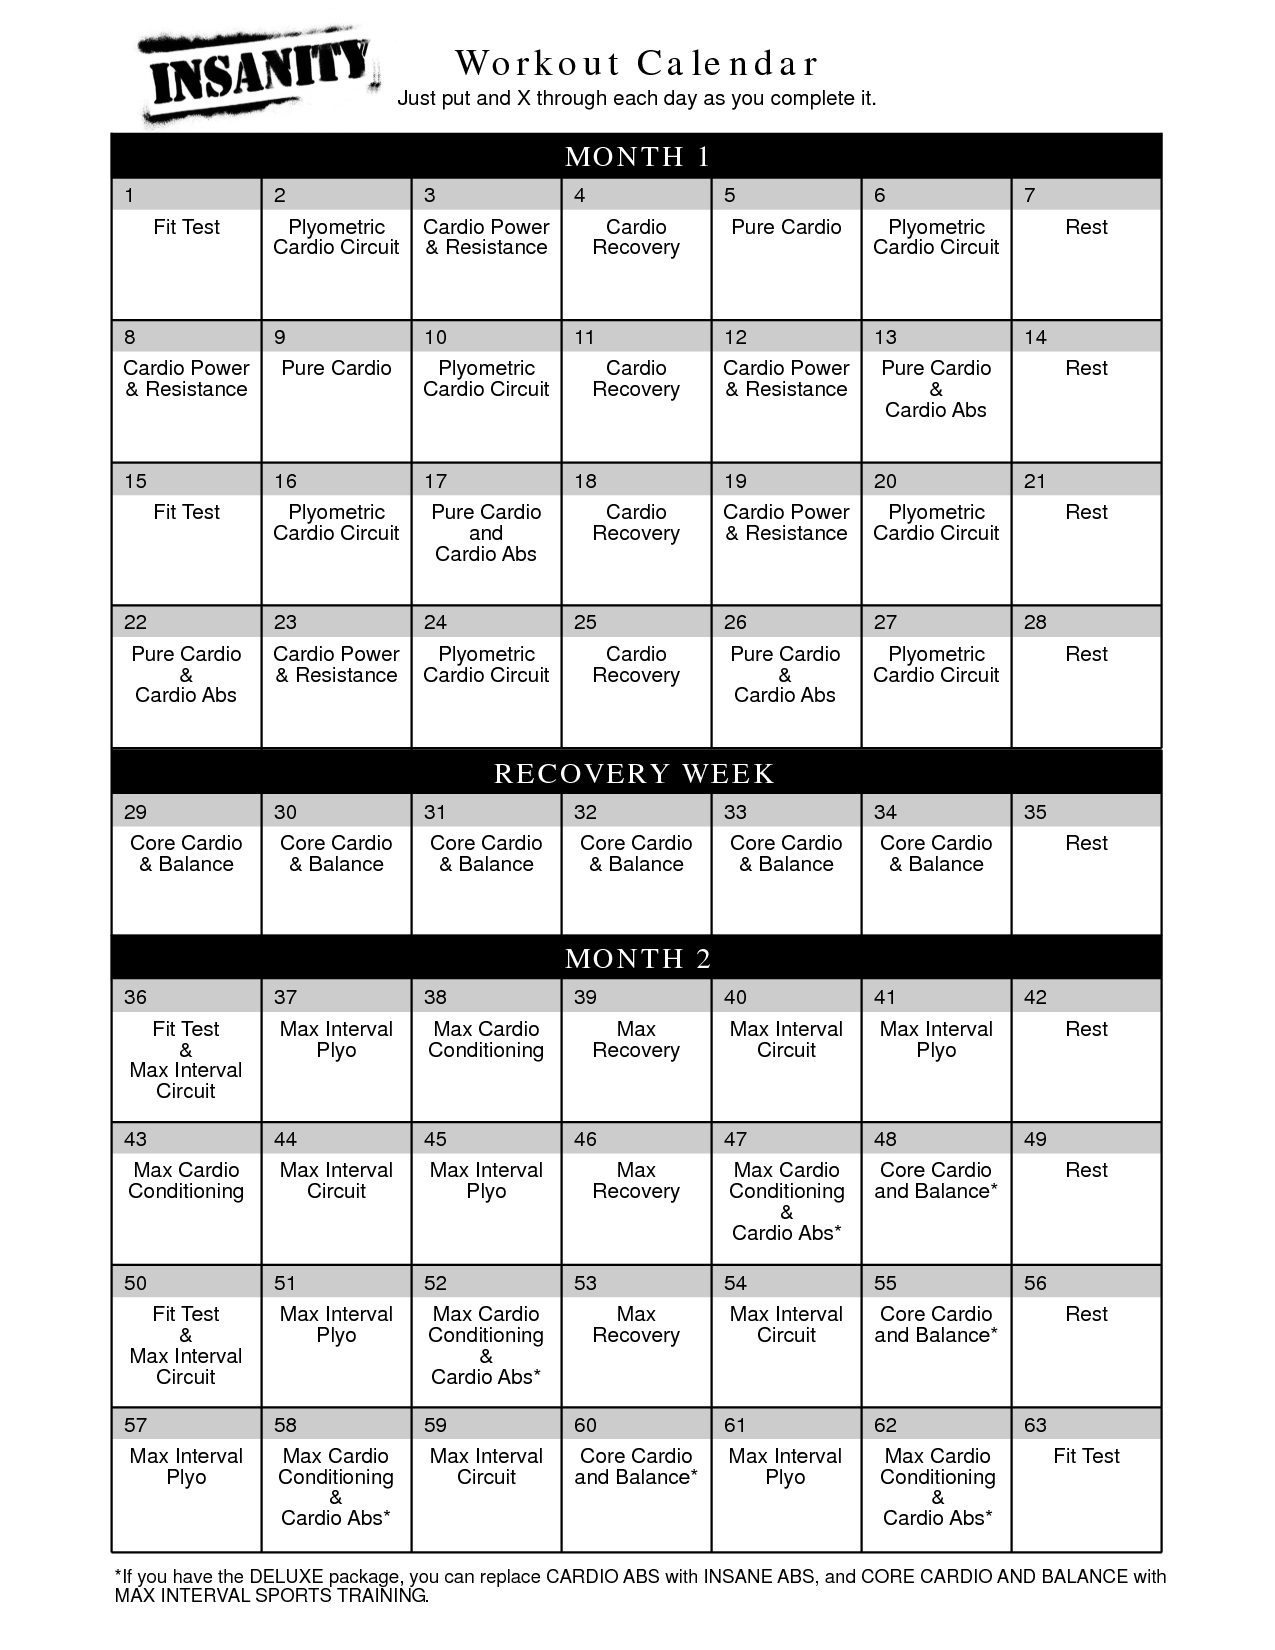 Insanity Workout Calendar.pdf Image